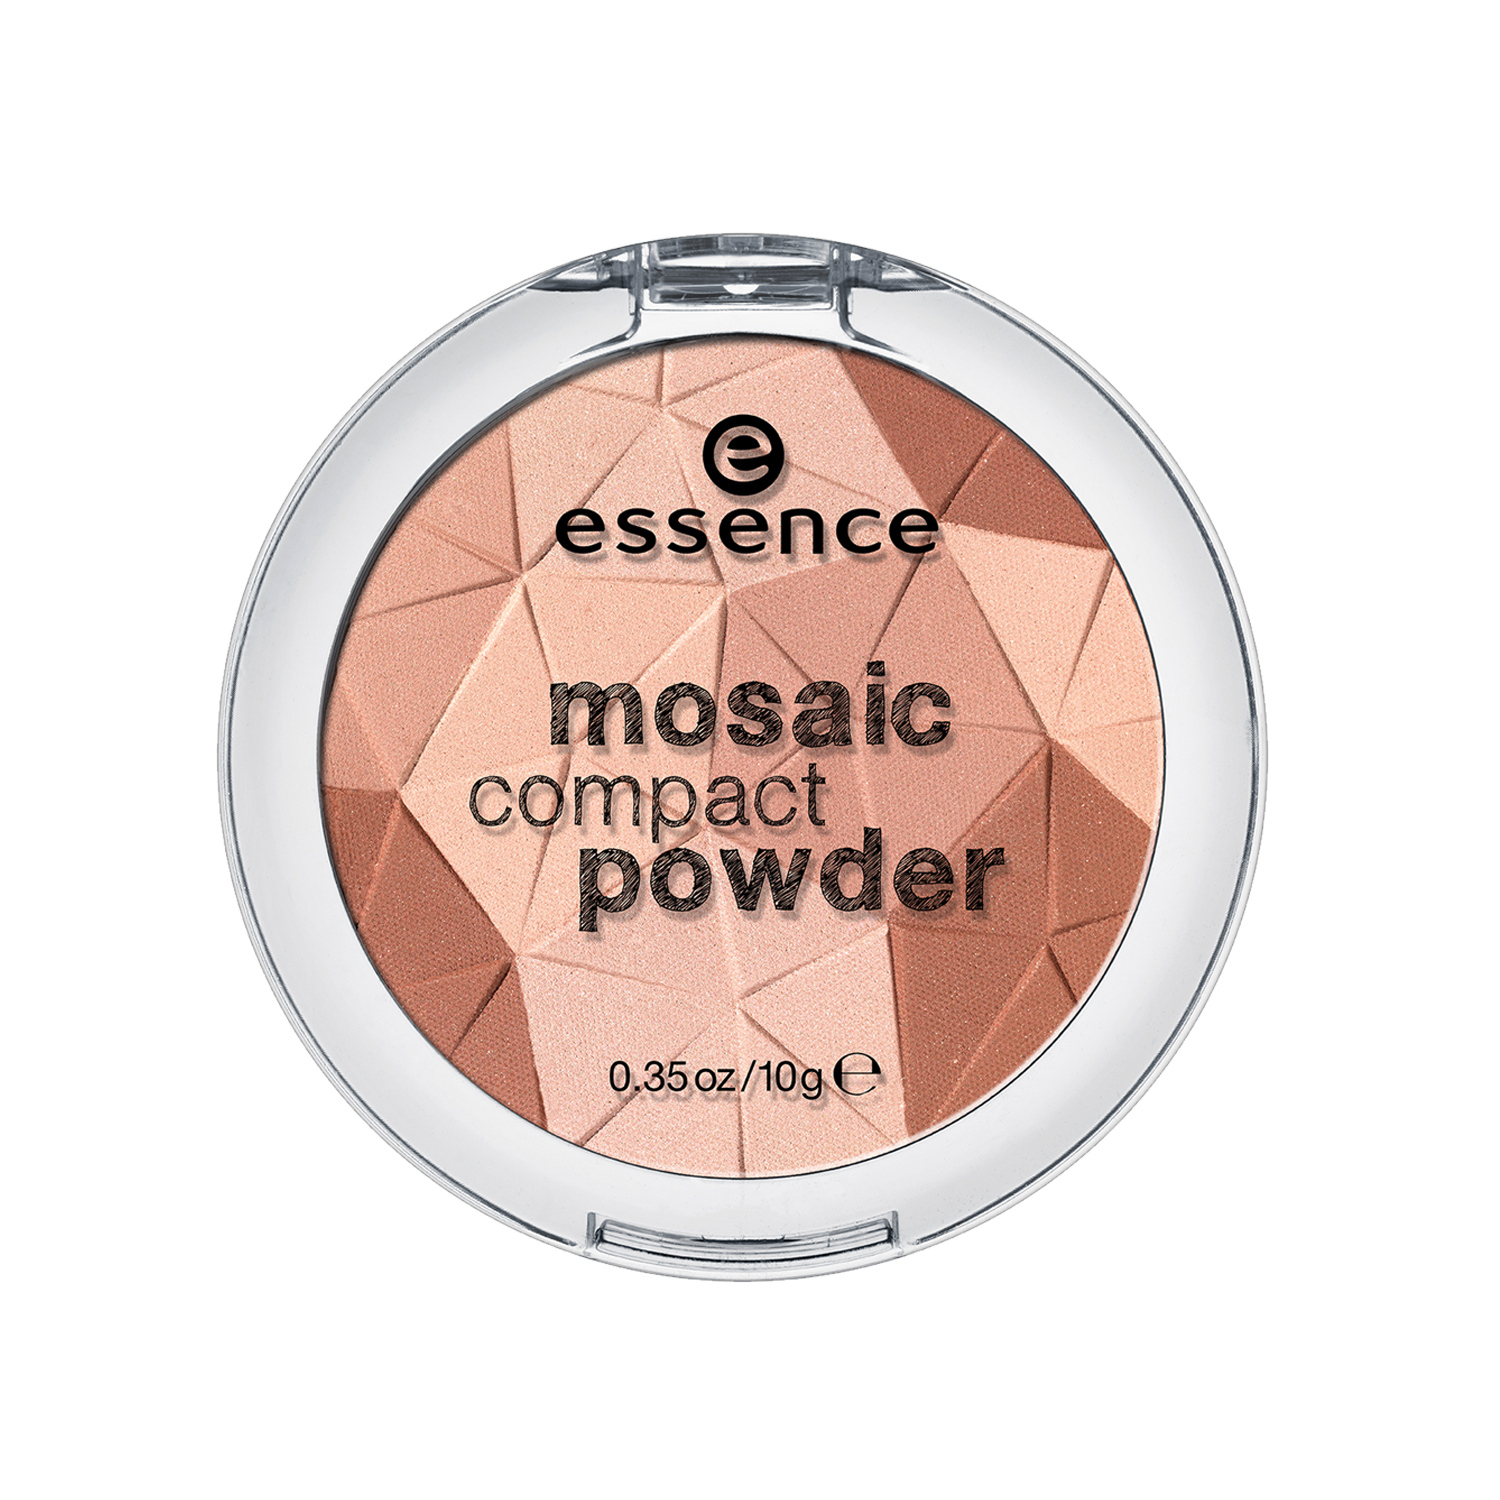 essence mosaic powder 01 - เอสเซนส์โมเซคคอมแพ็คพาวเดอร์01